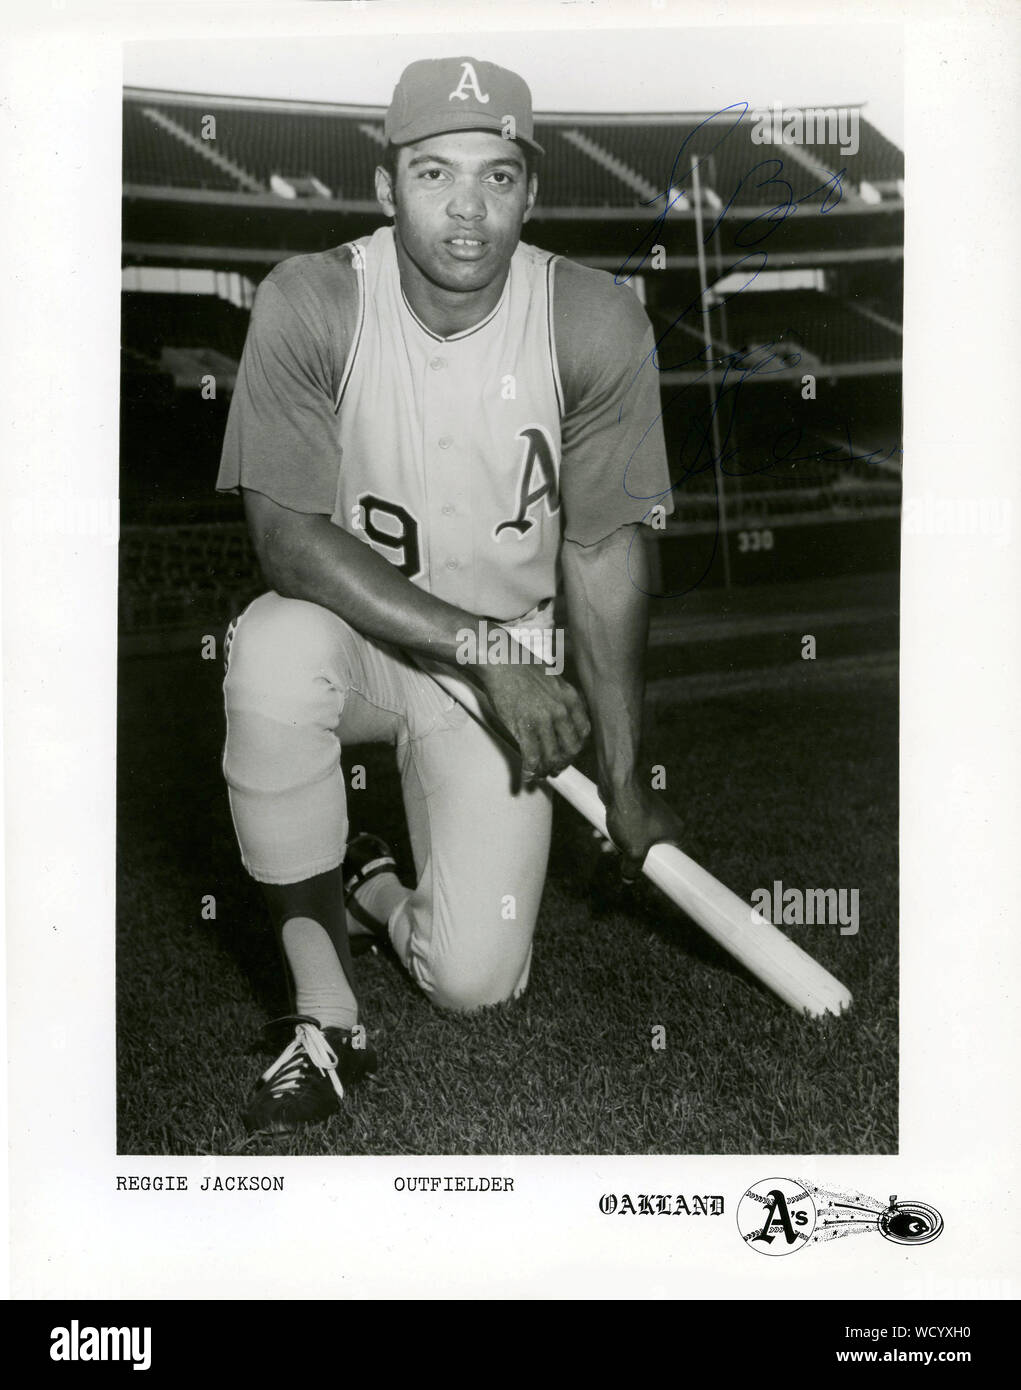 Reggie jackson baseball player hi-res stock photography and images - Alamy